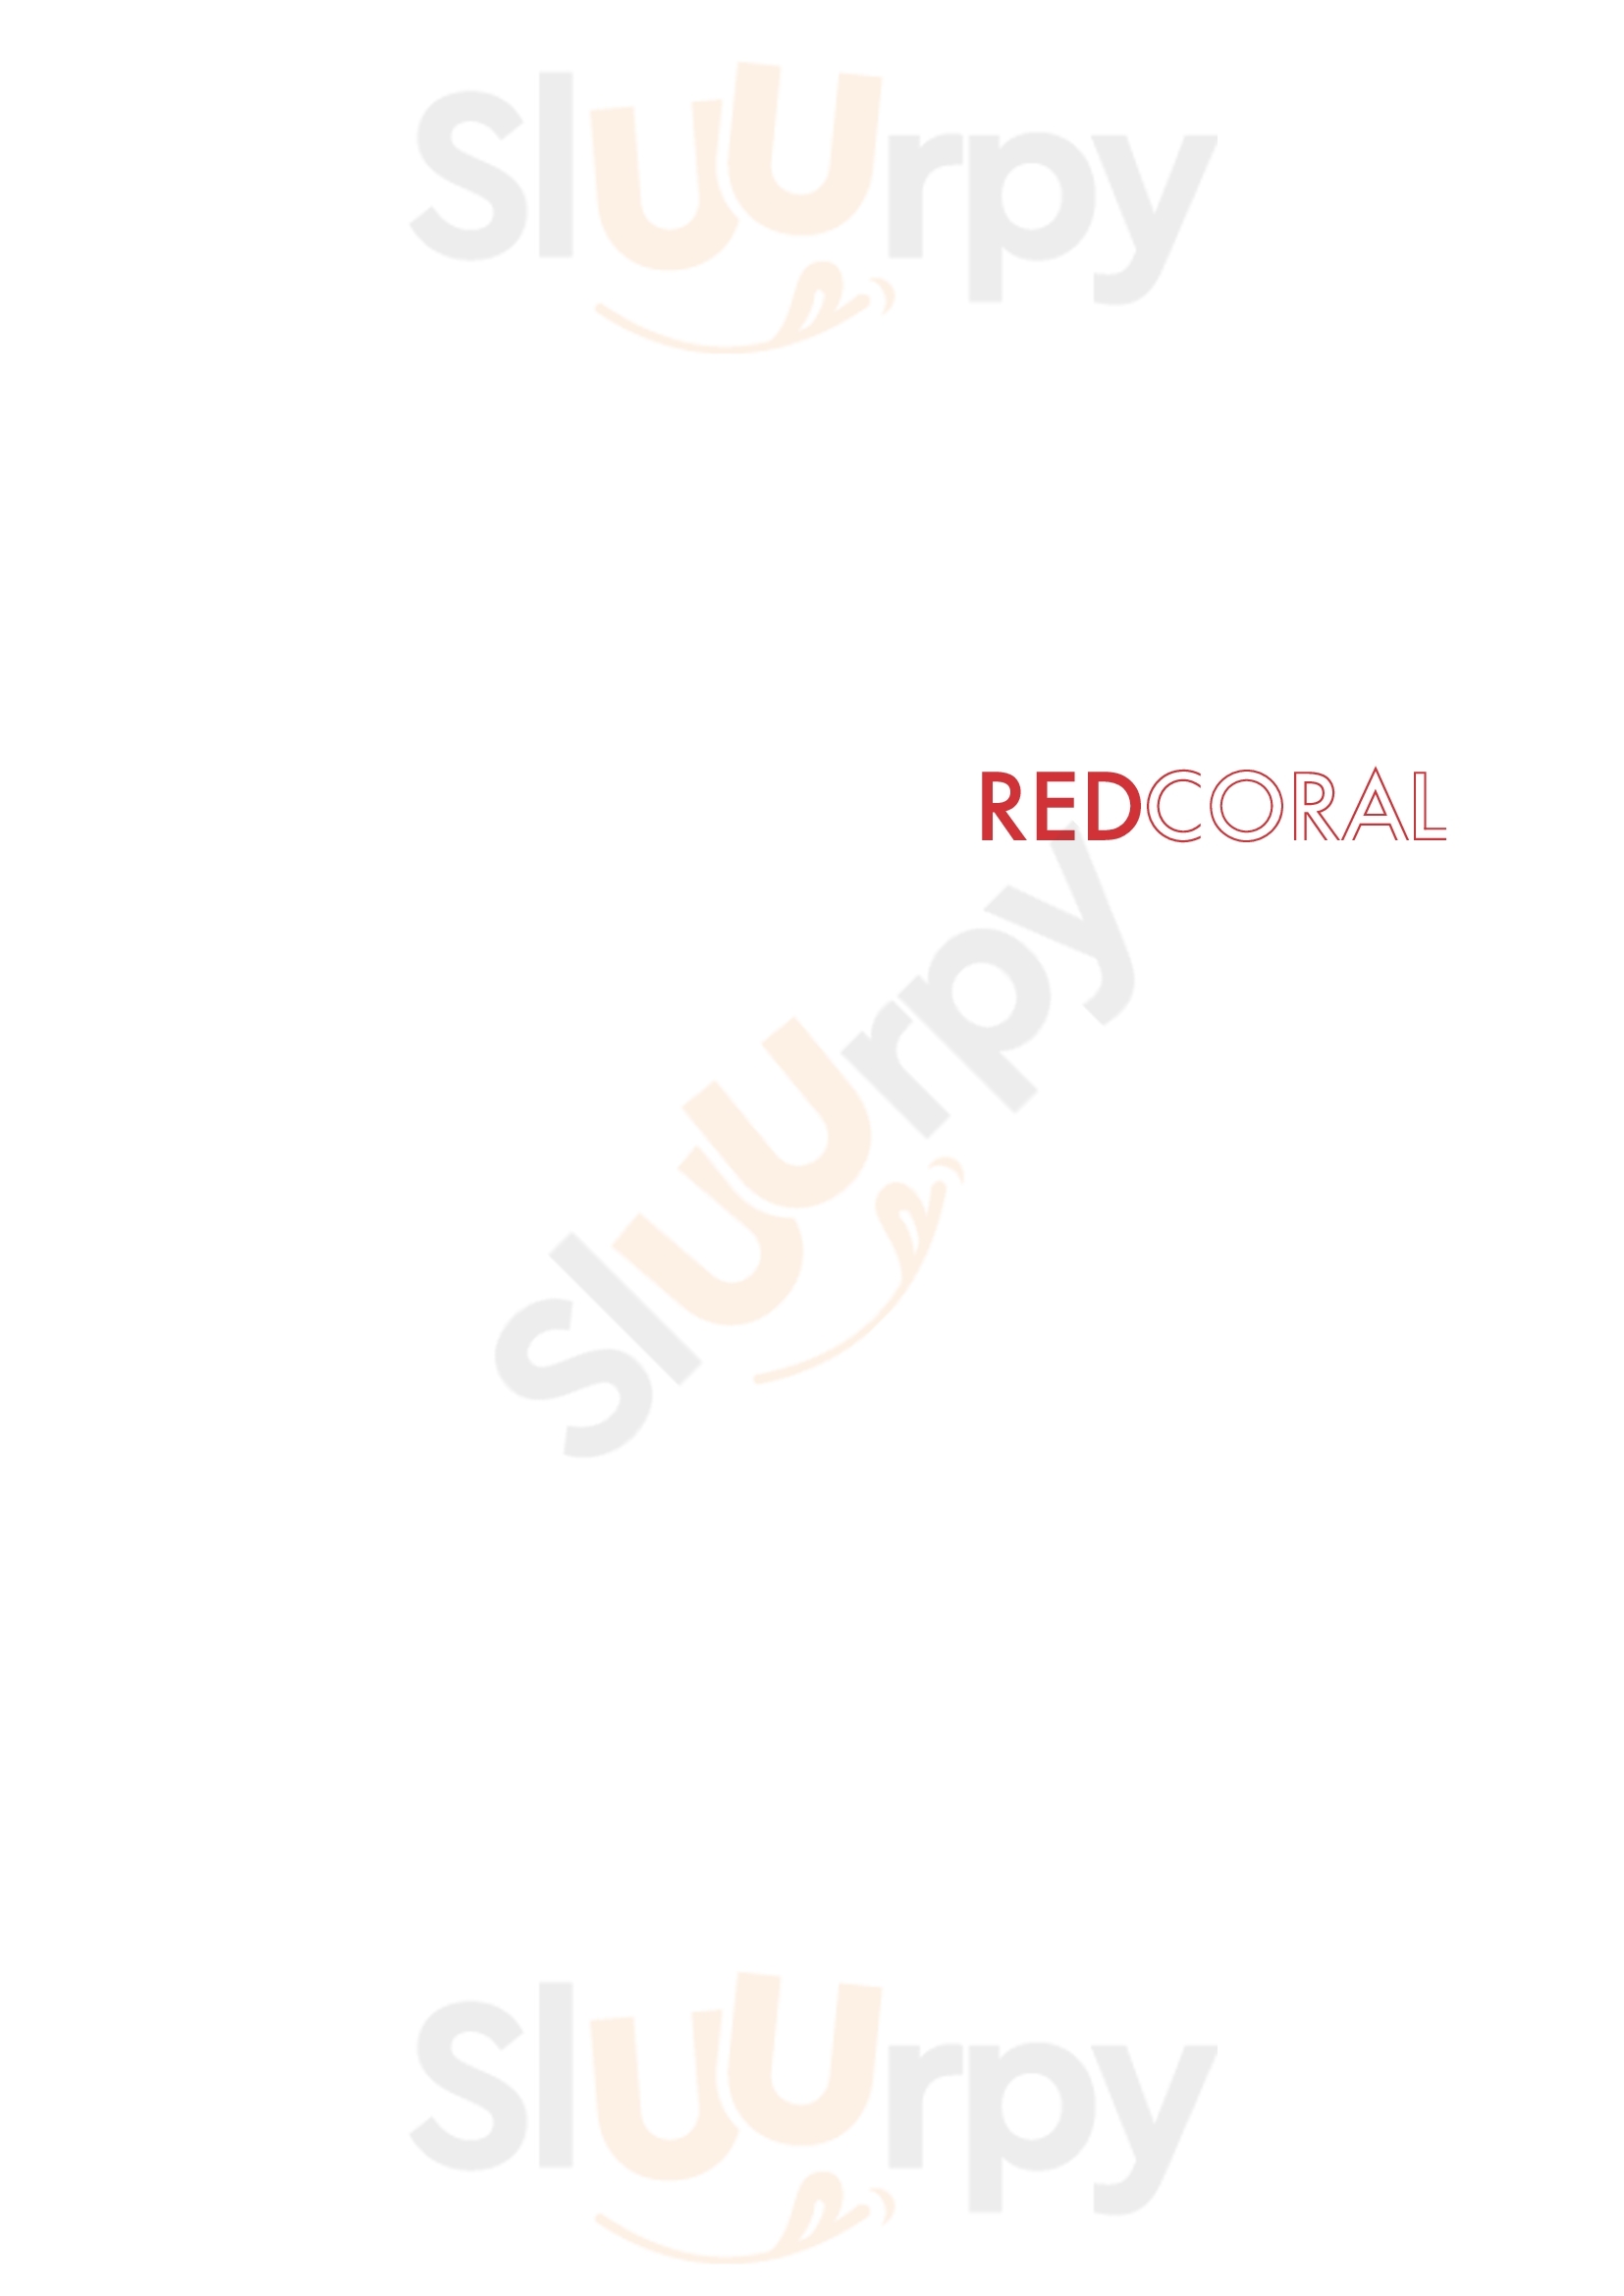 Red Coral Lounge พัทยา Menu - 1